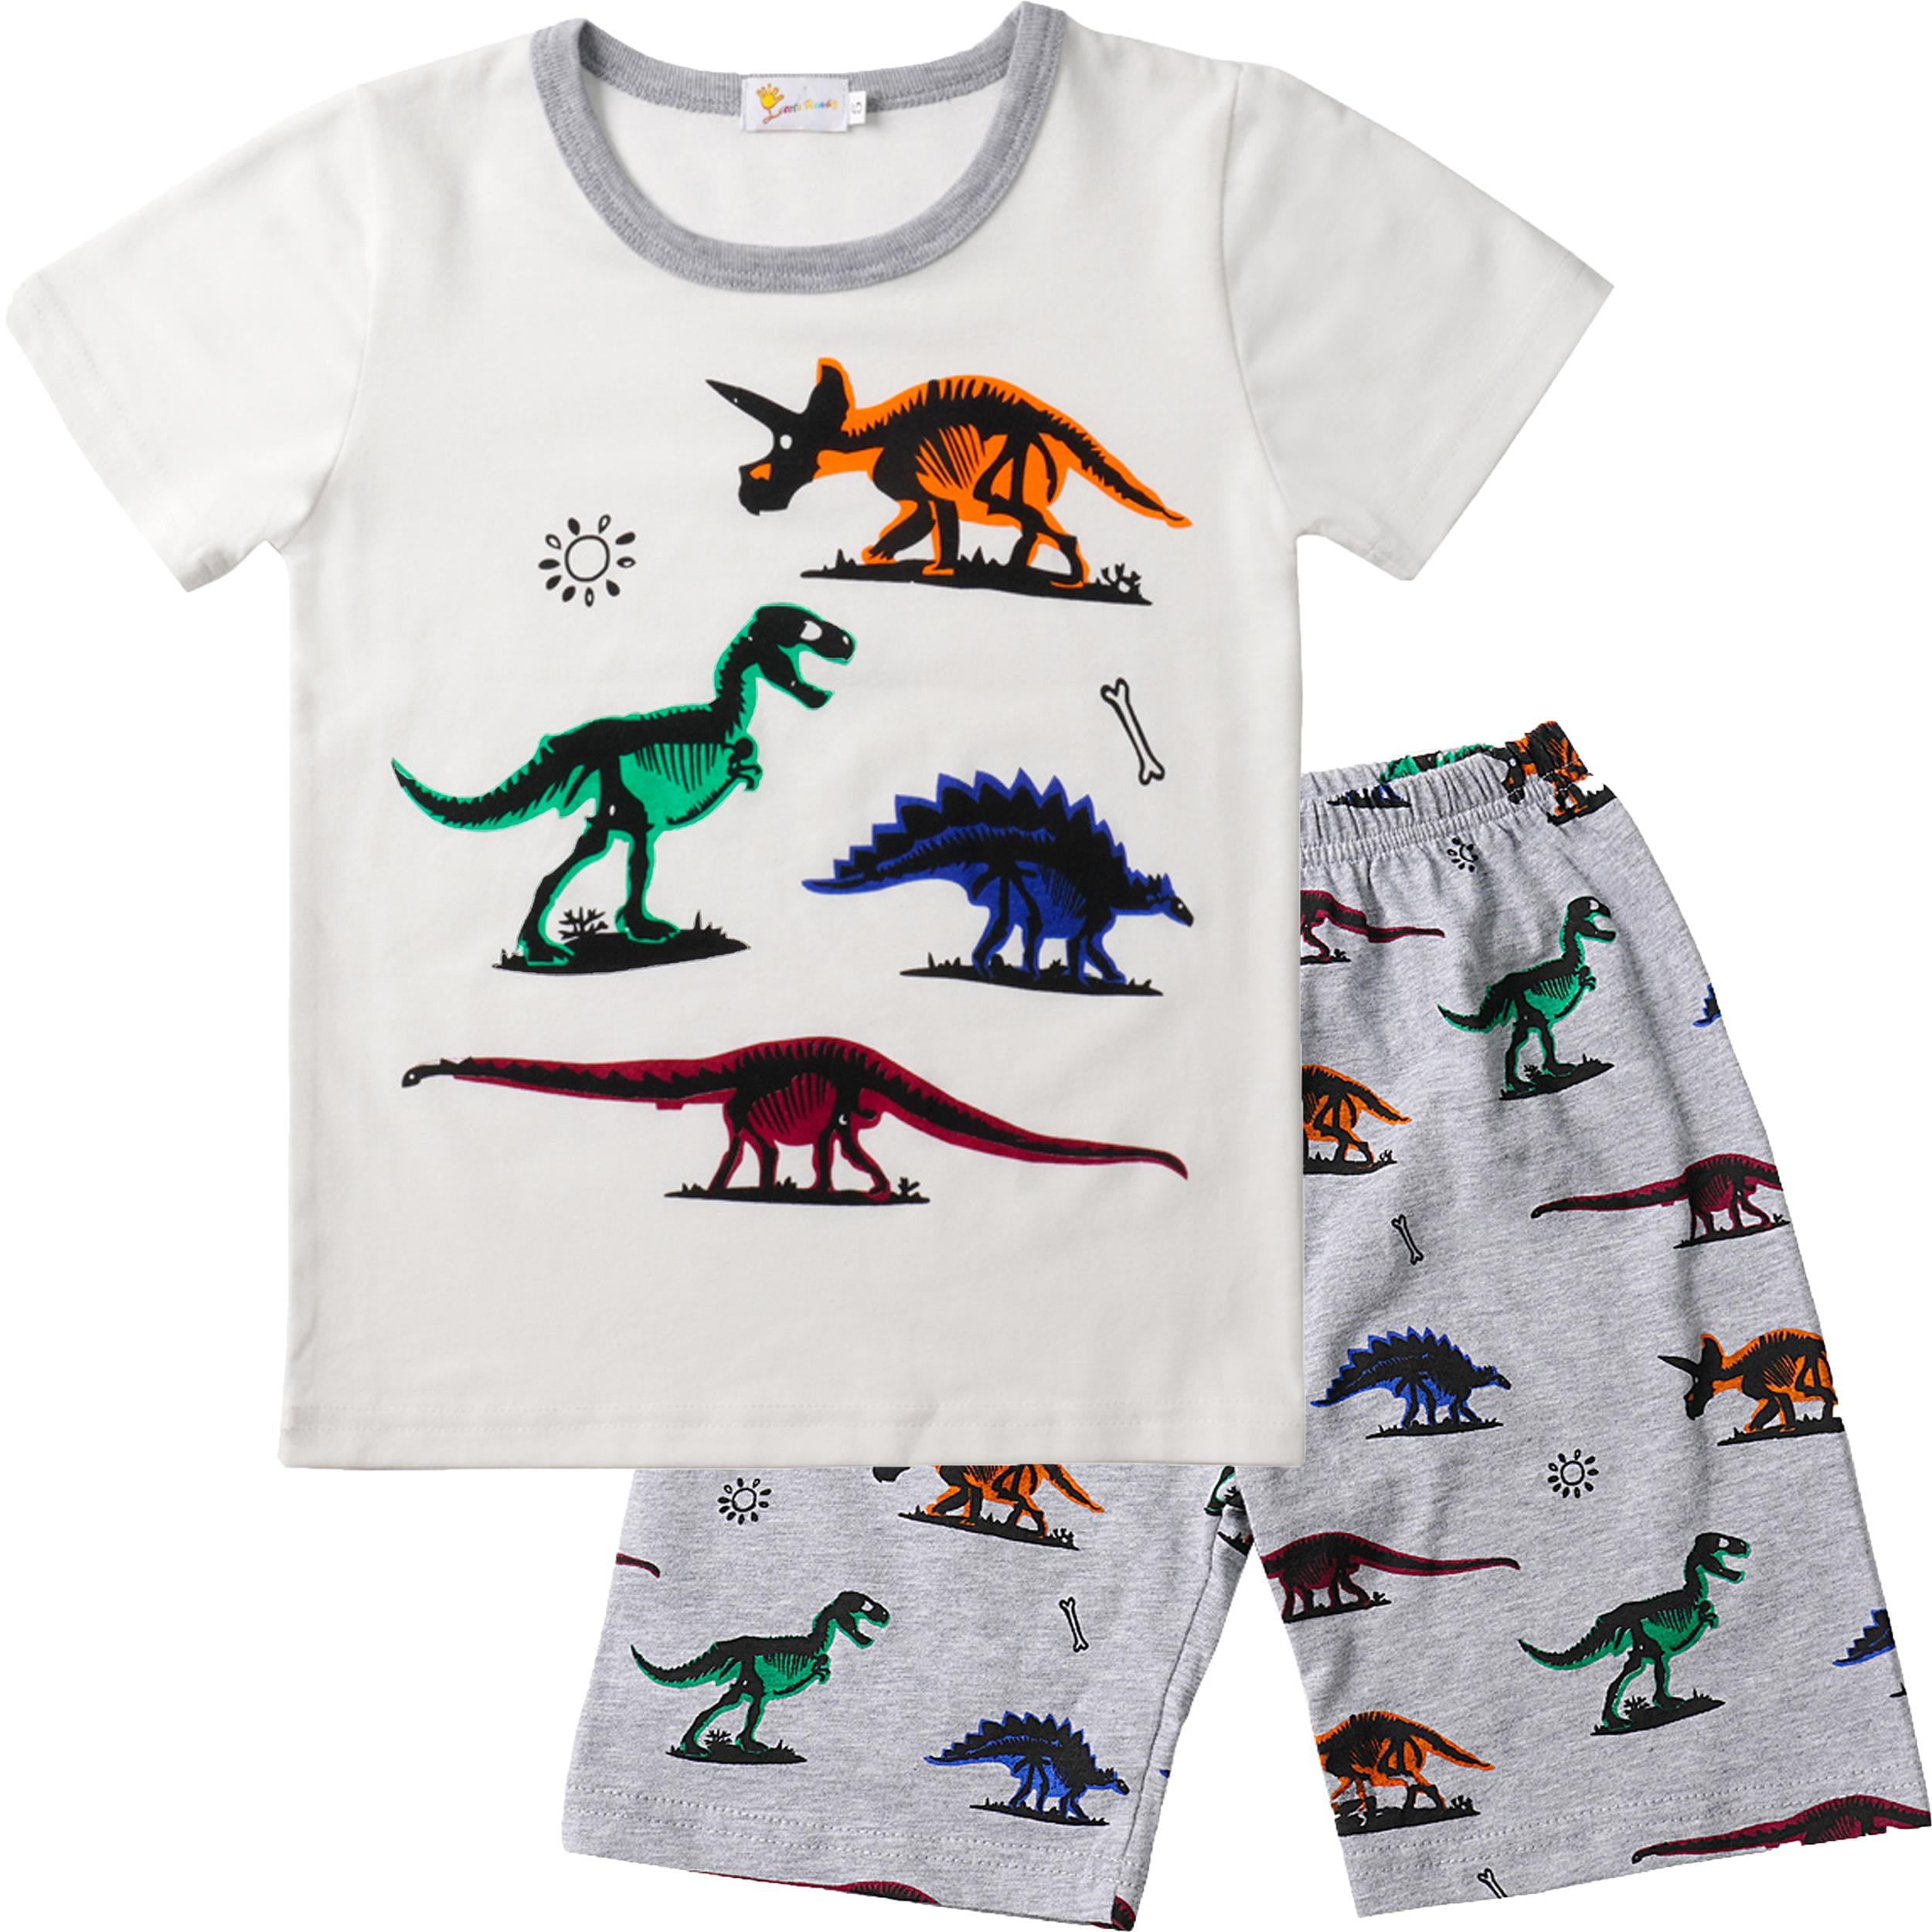 Personalised Dinosaur Name Kids Pyjamas Children's Pjs Birthday Gifts Boys Girls 